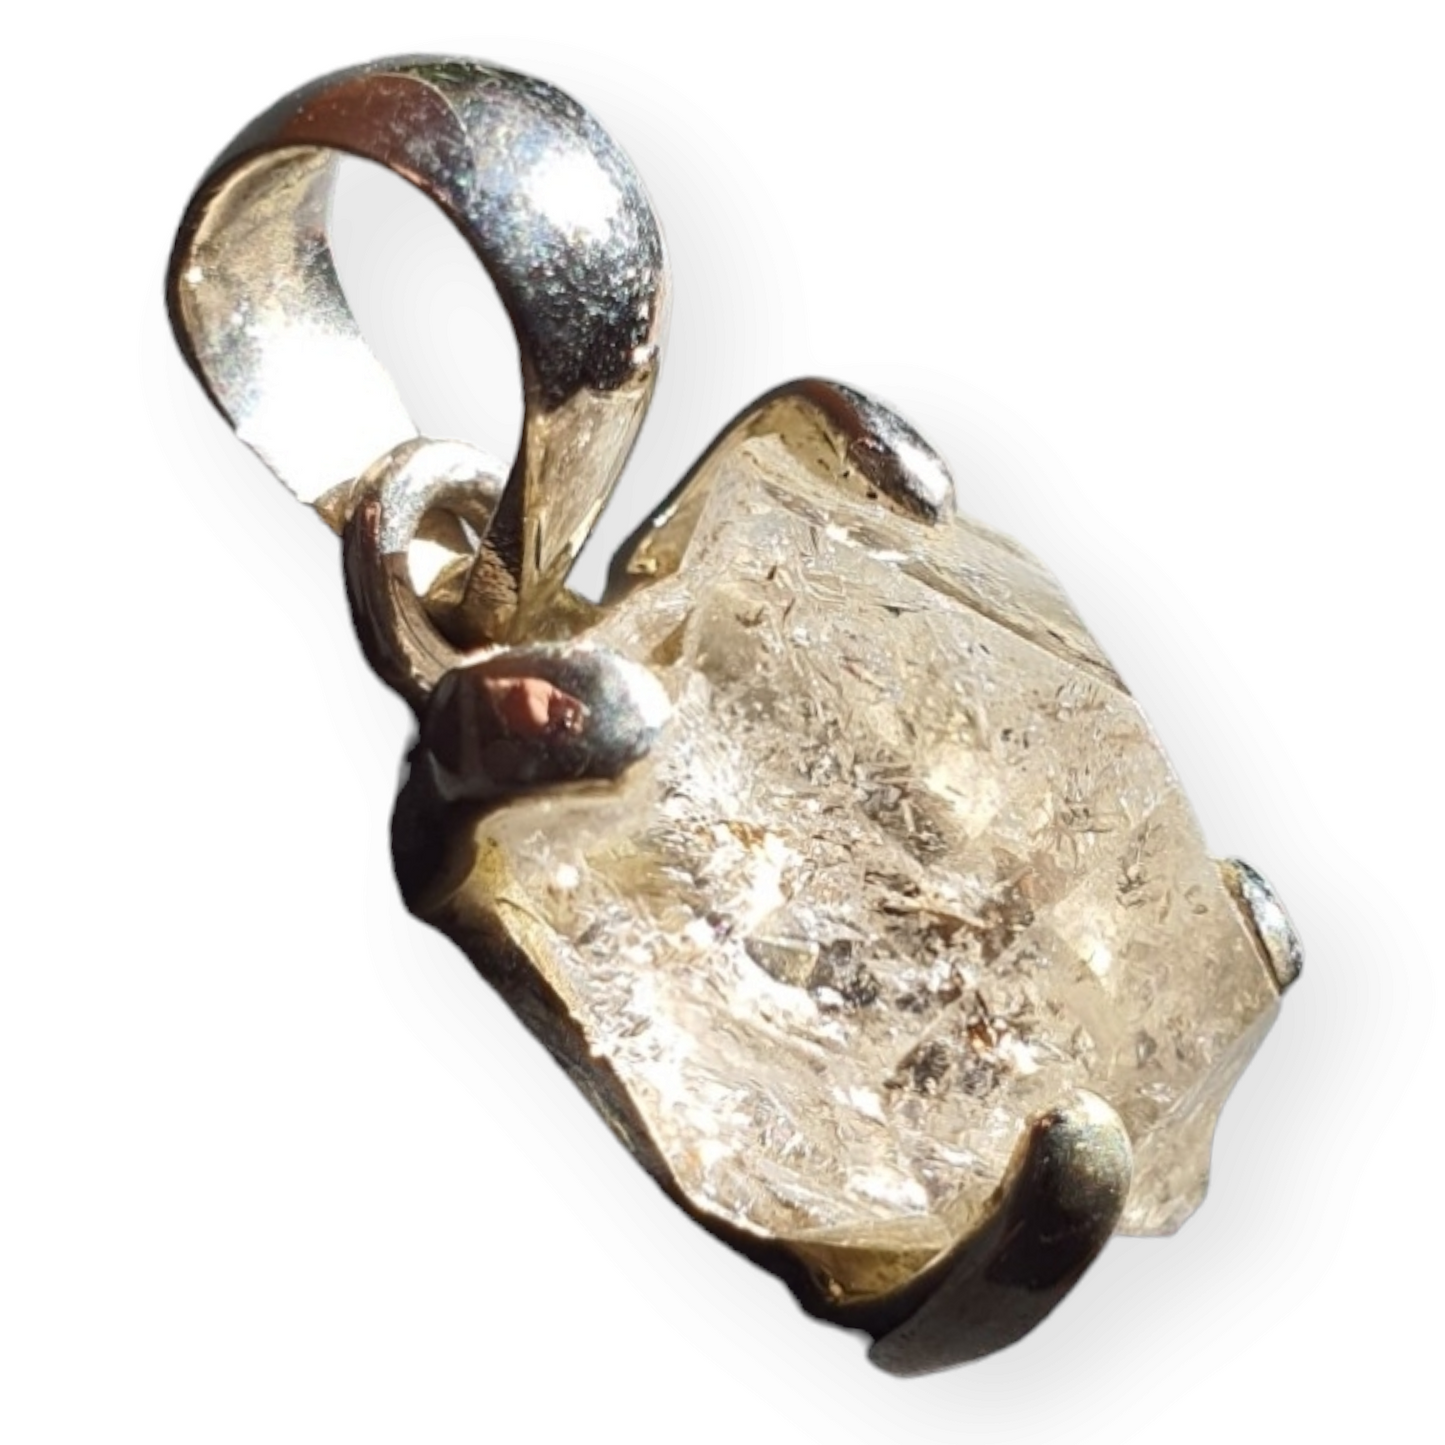 Crystals - Herkimer Diamond (Diamond Quartz) Natural Pendant - Sterling Silver